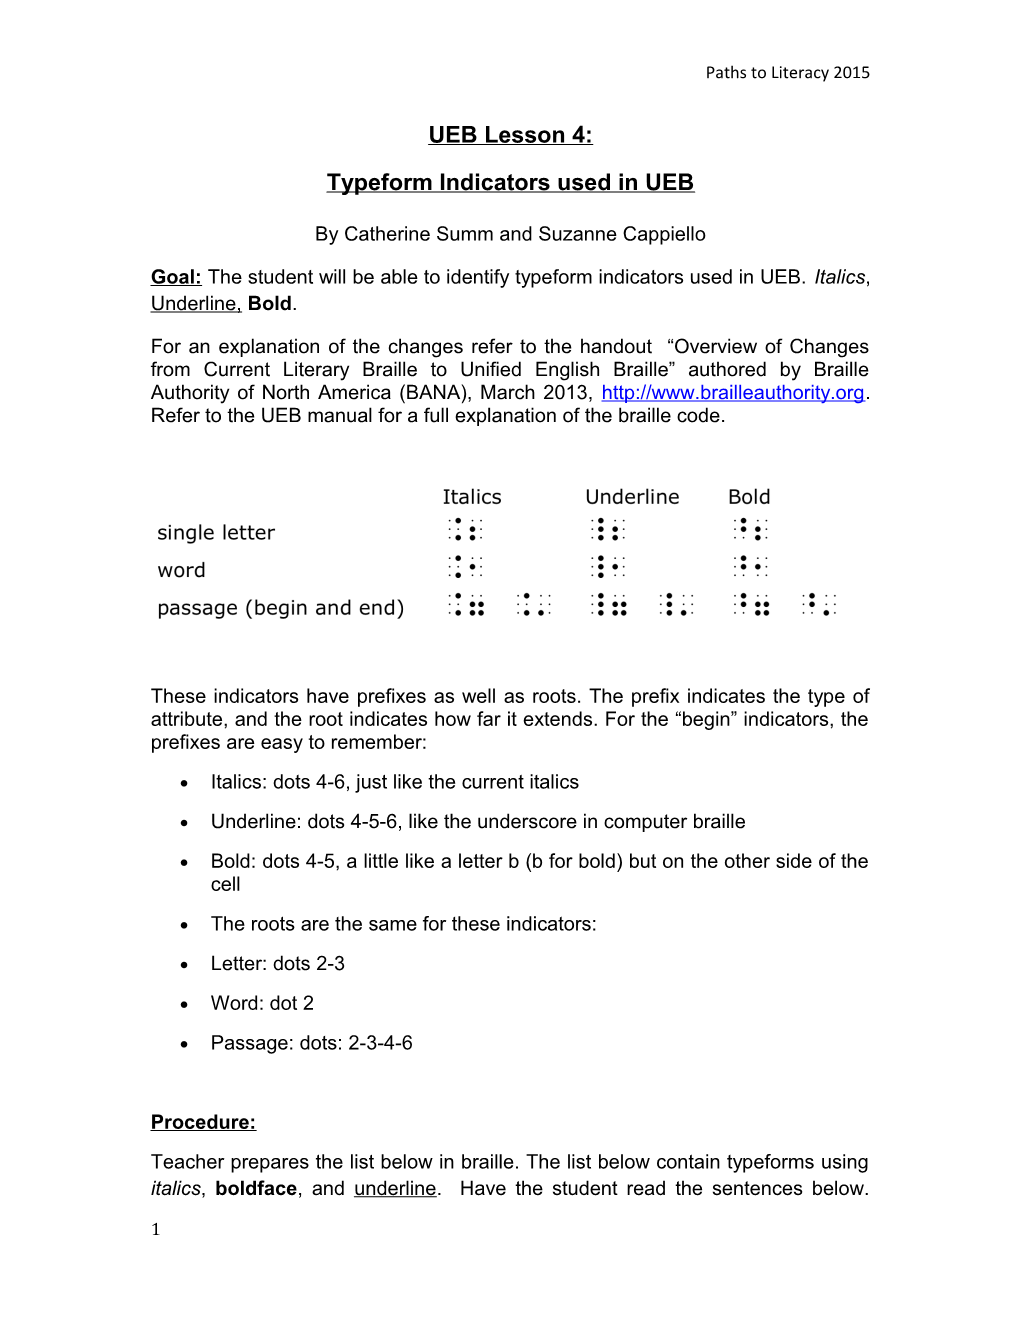 Typeform Indicators Used in UEB